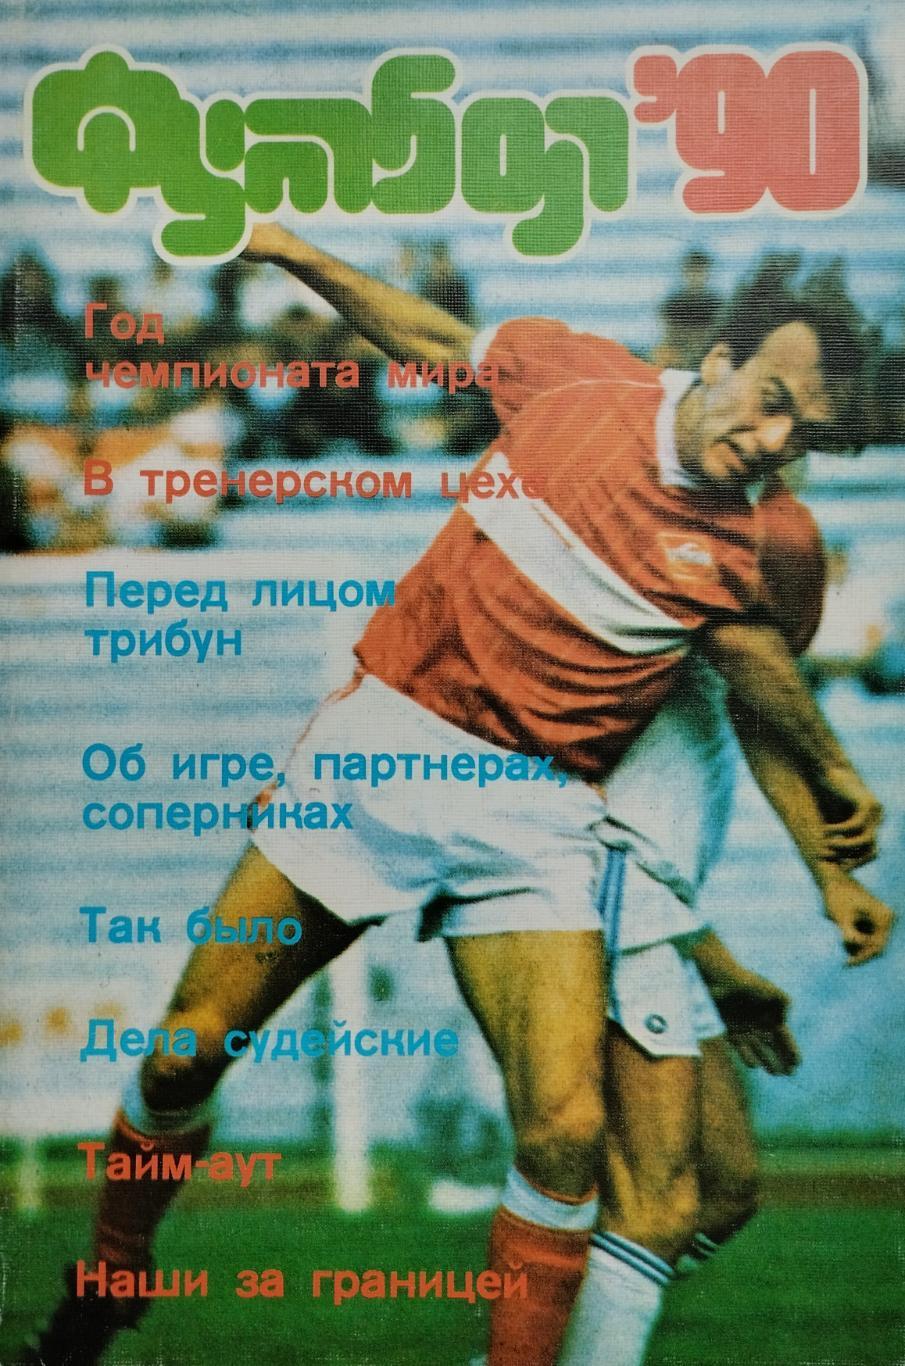 Футбол - 90: Альманах. Л. Г. Лебедев. 1990. 160 стр.